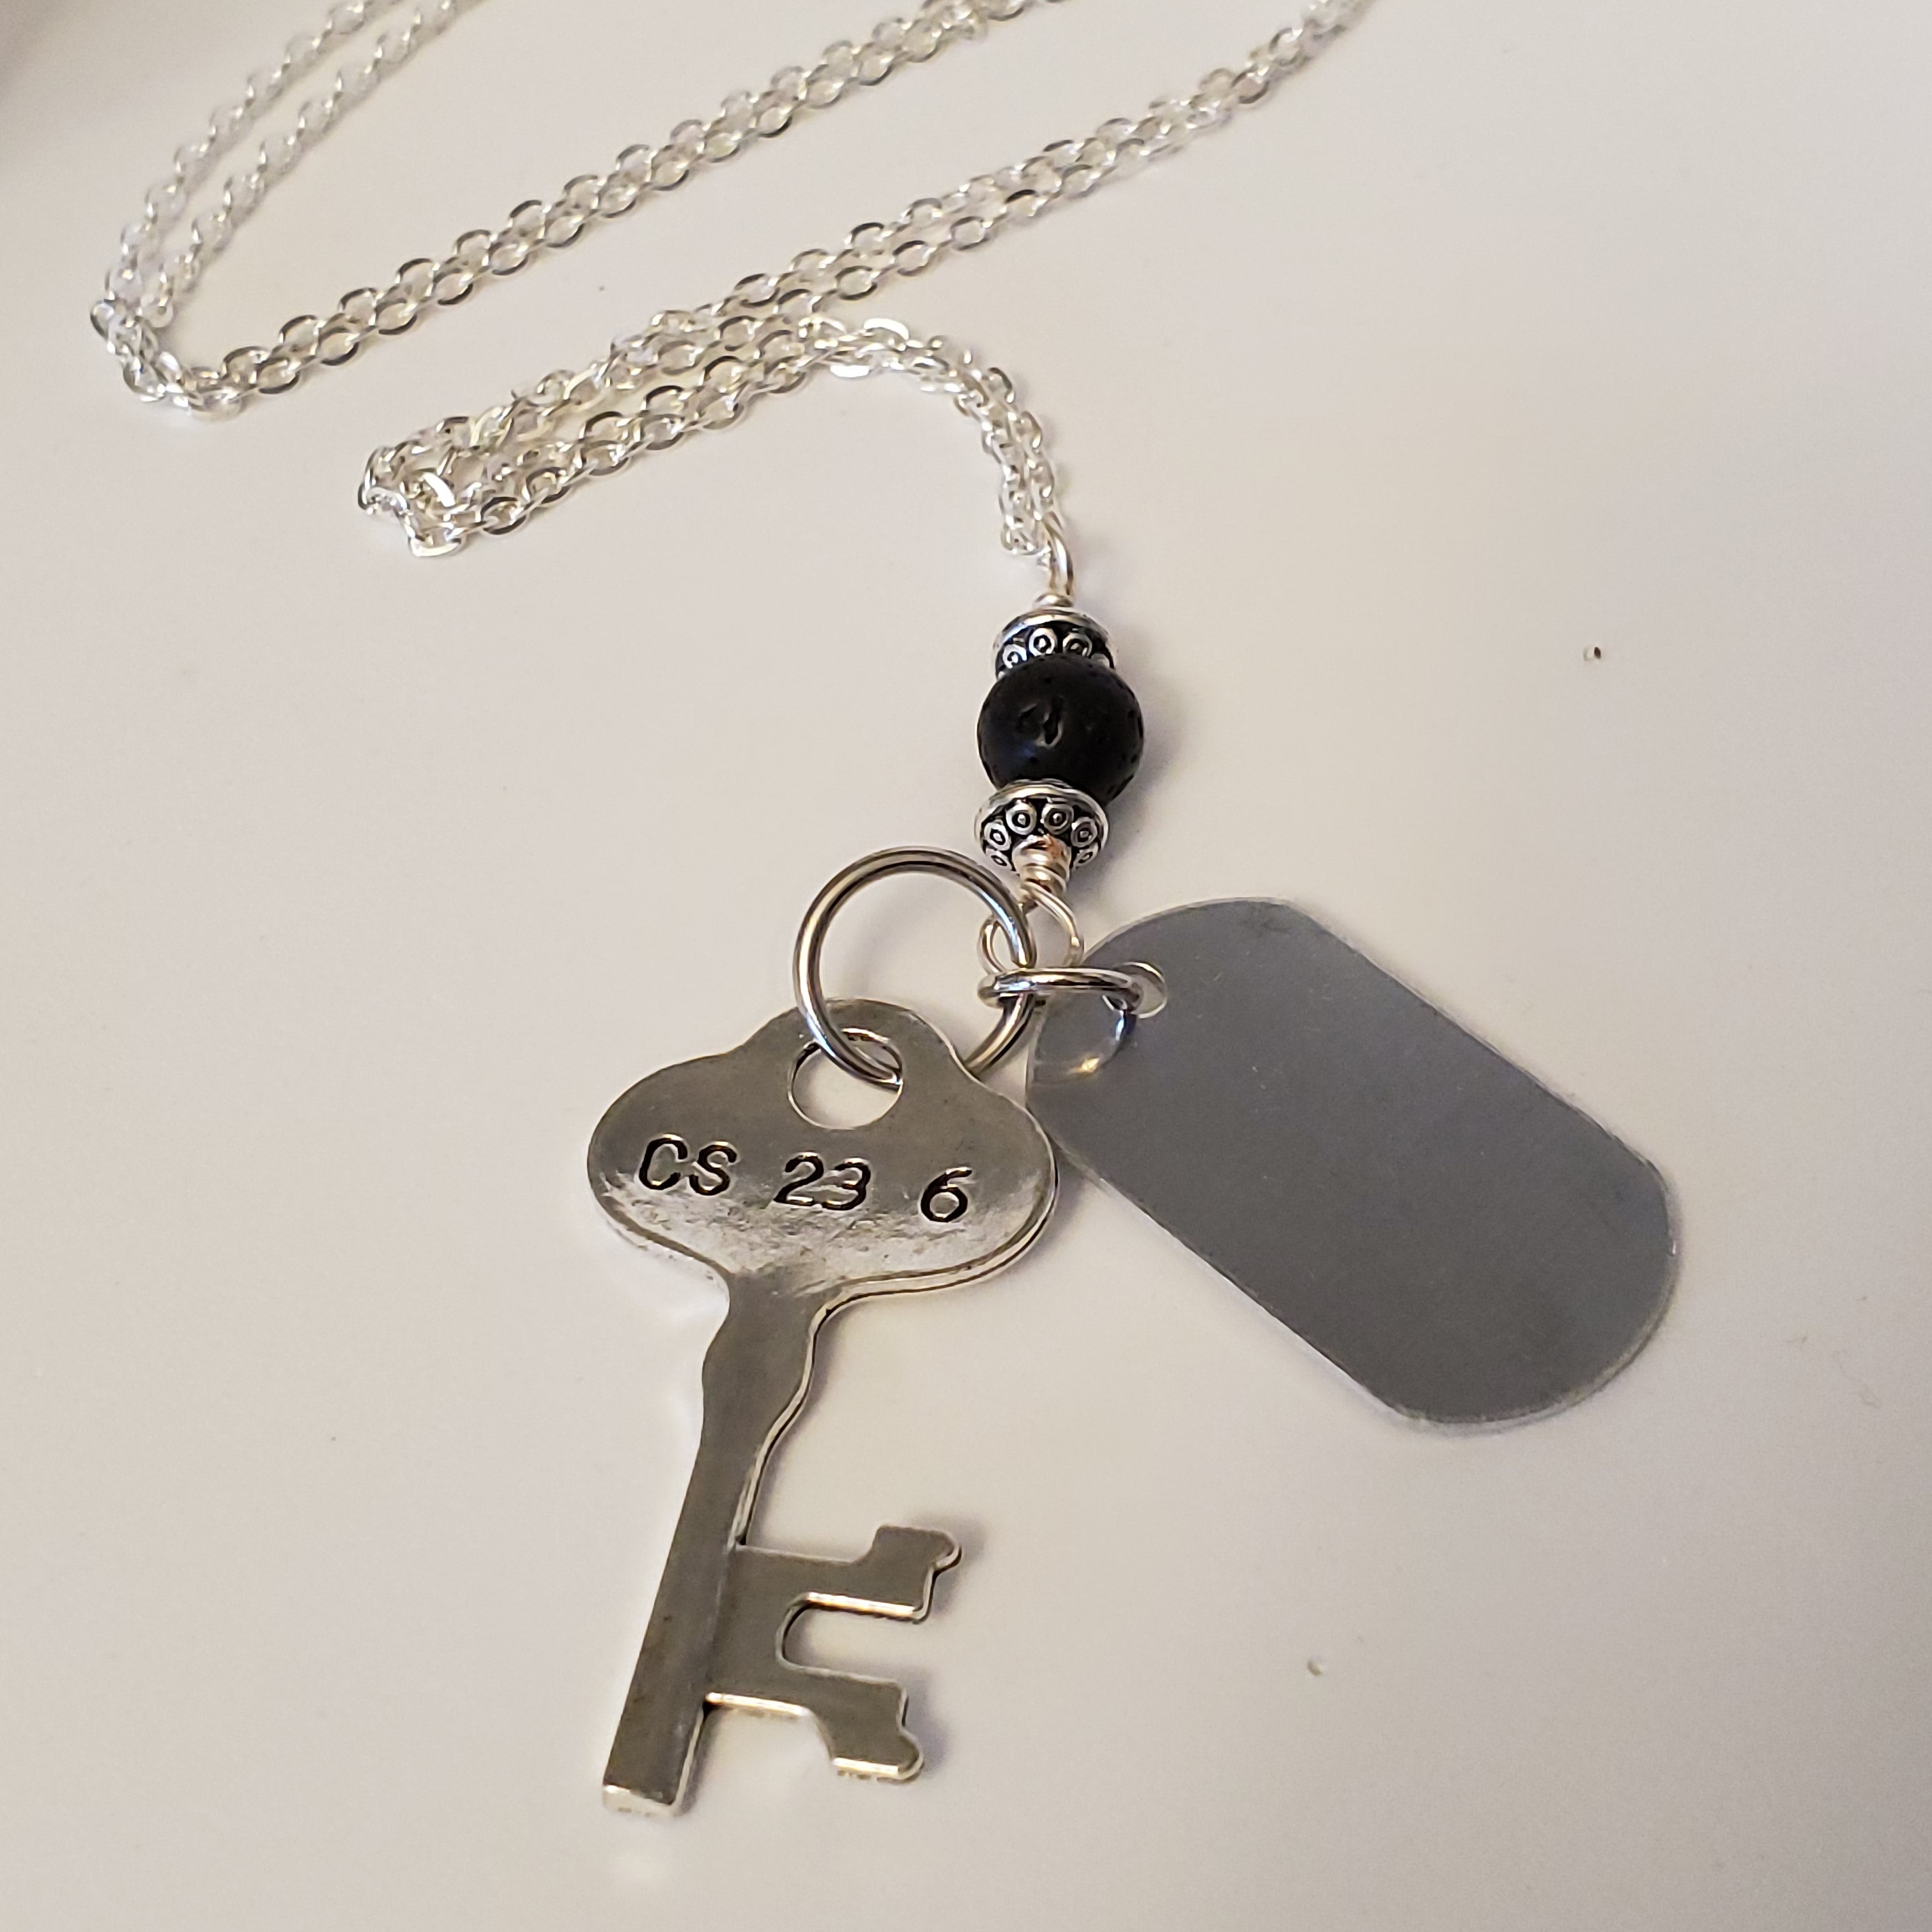 Key-shaped charm, dog tag and black lava bead